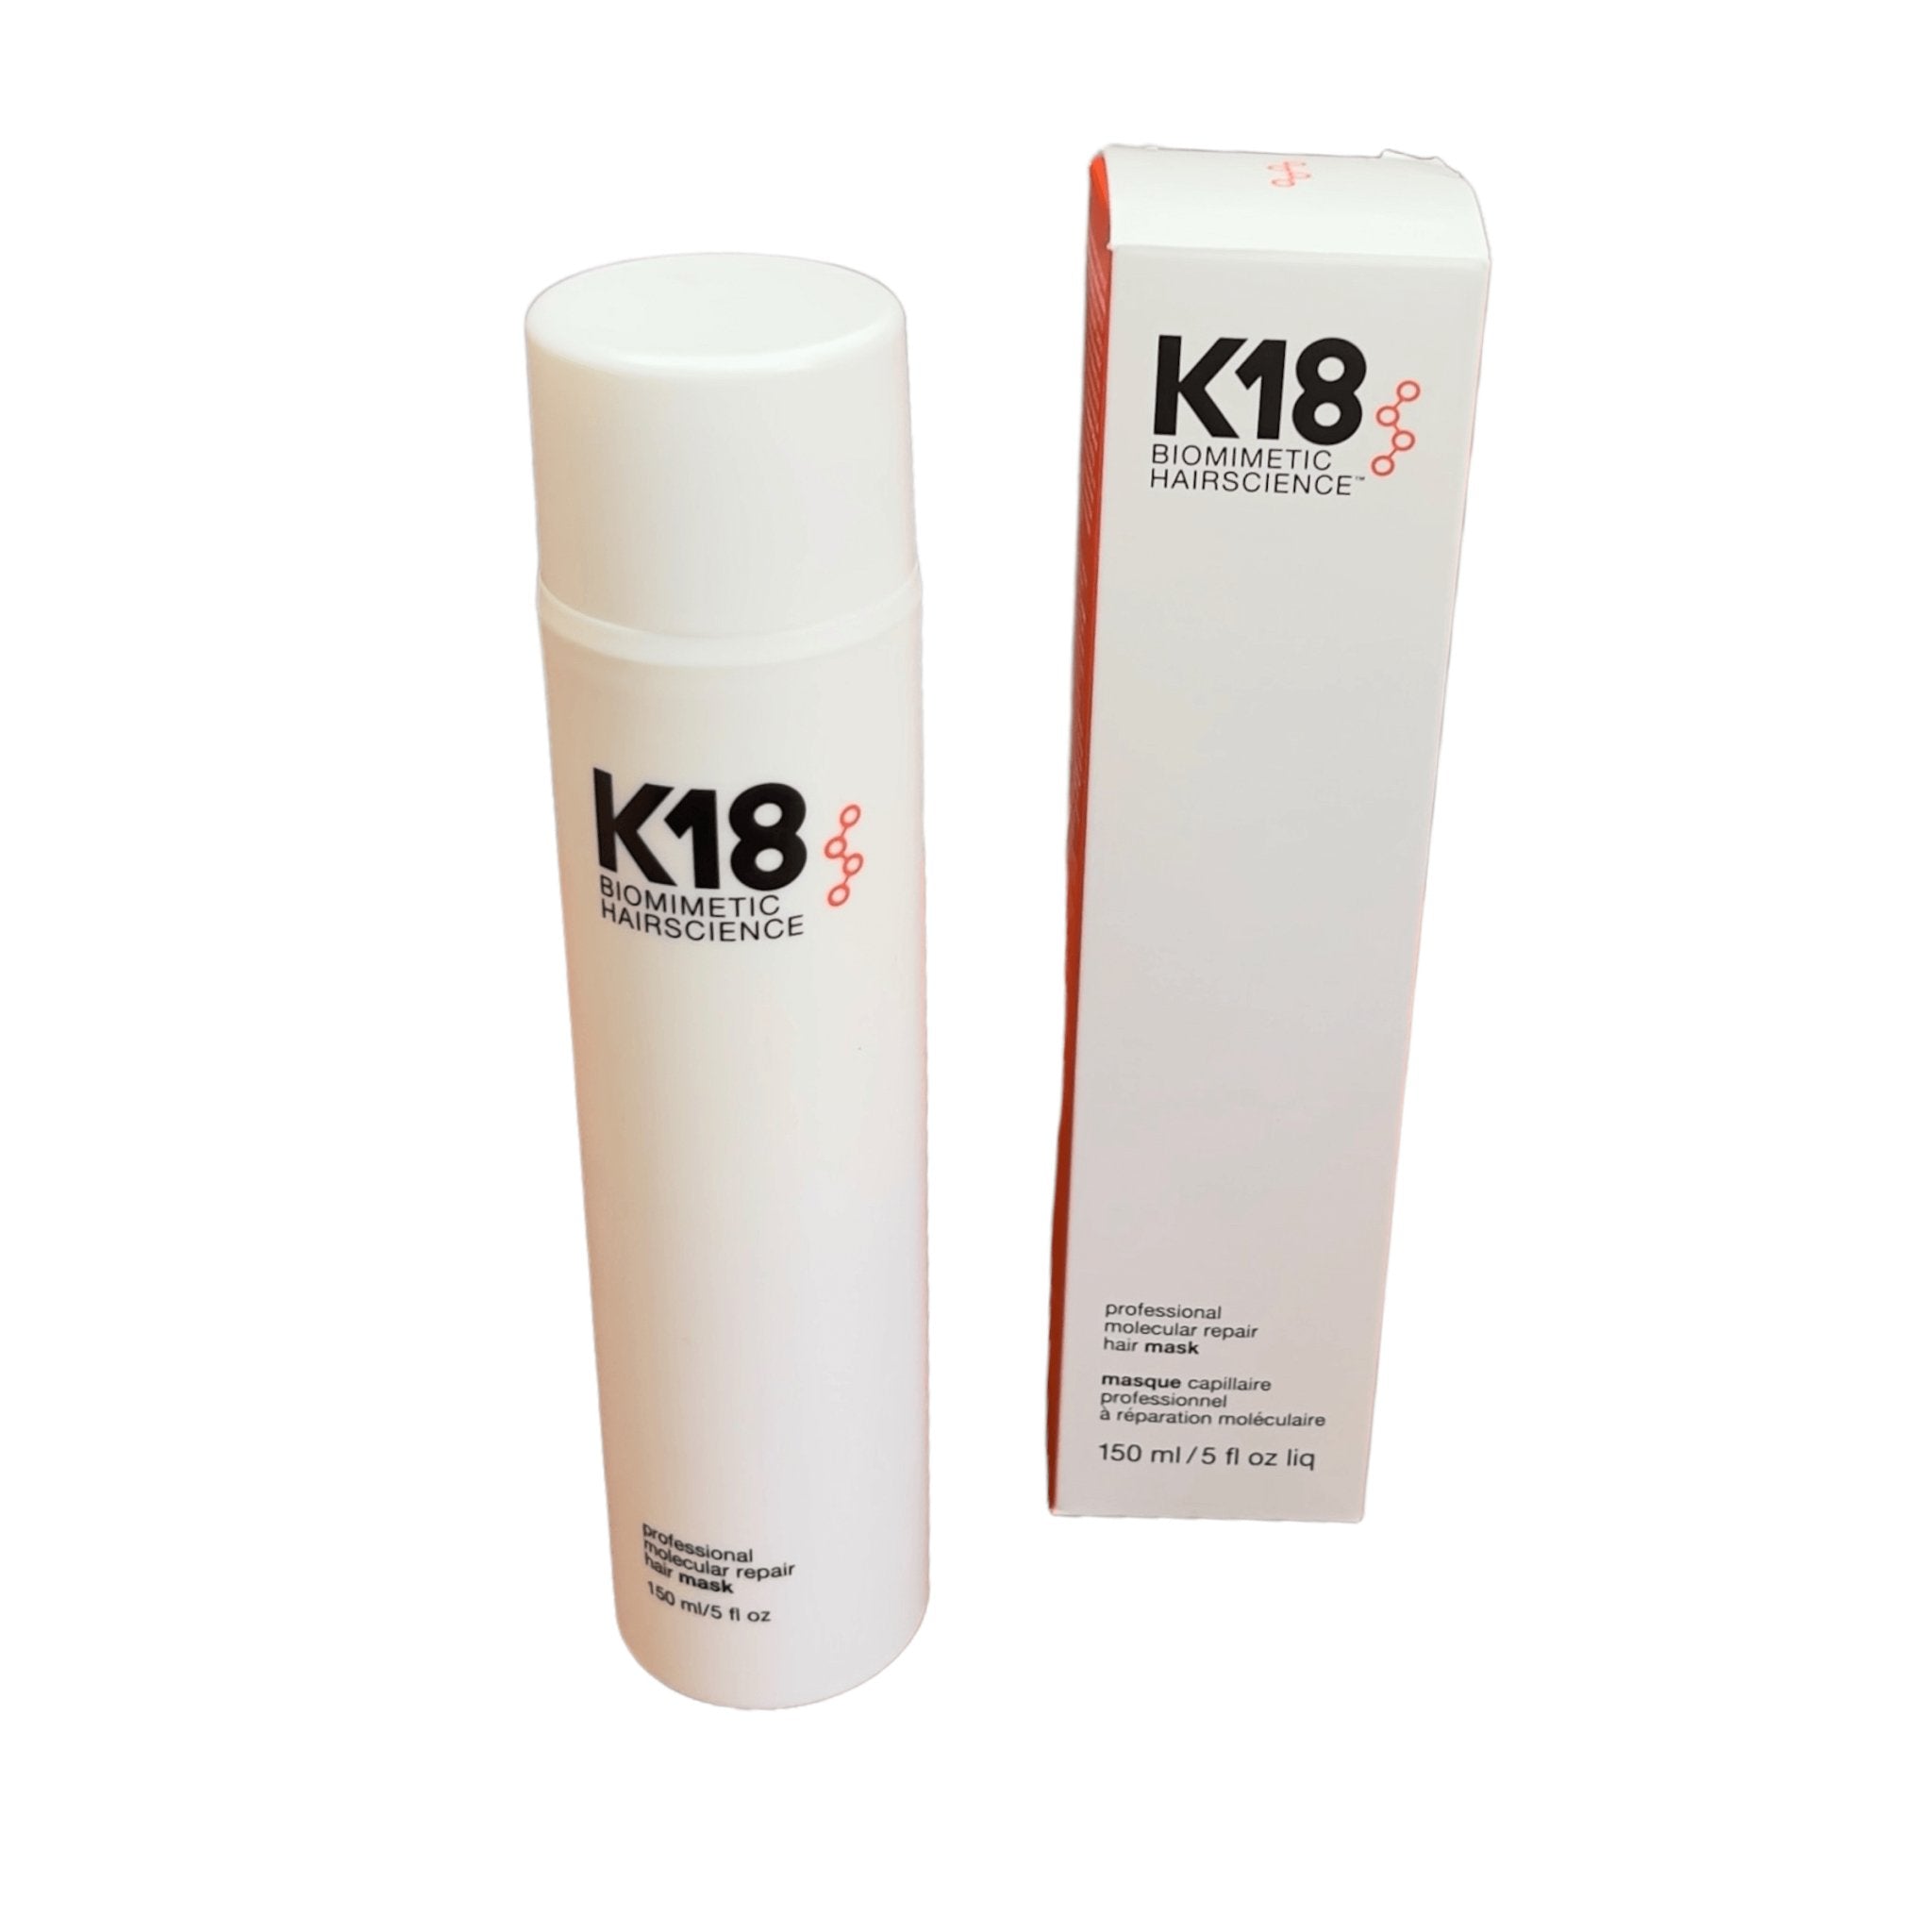 A box of K18 Hair Repair shampoo with a white box next to it.